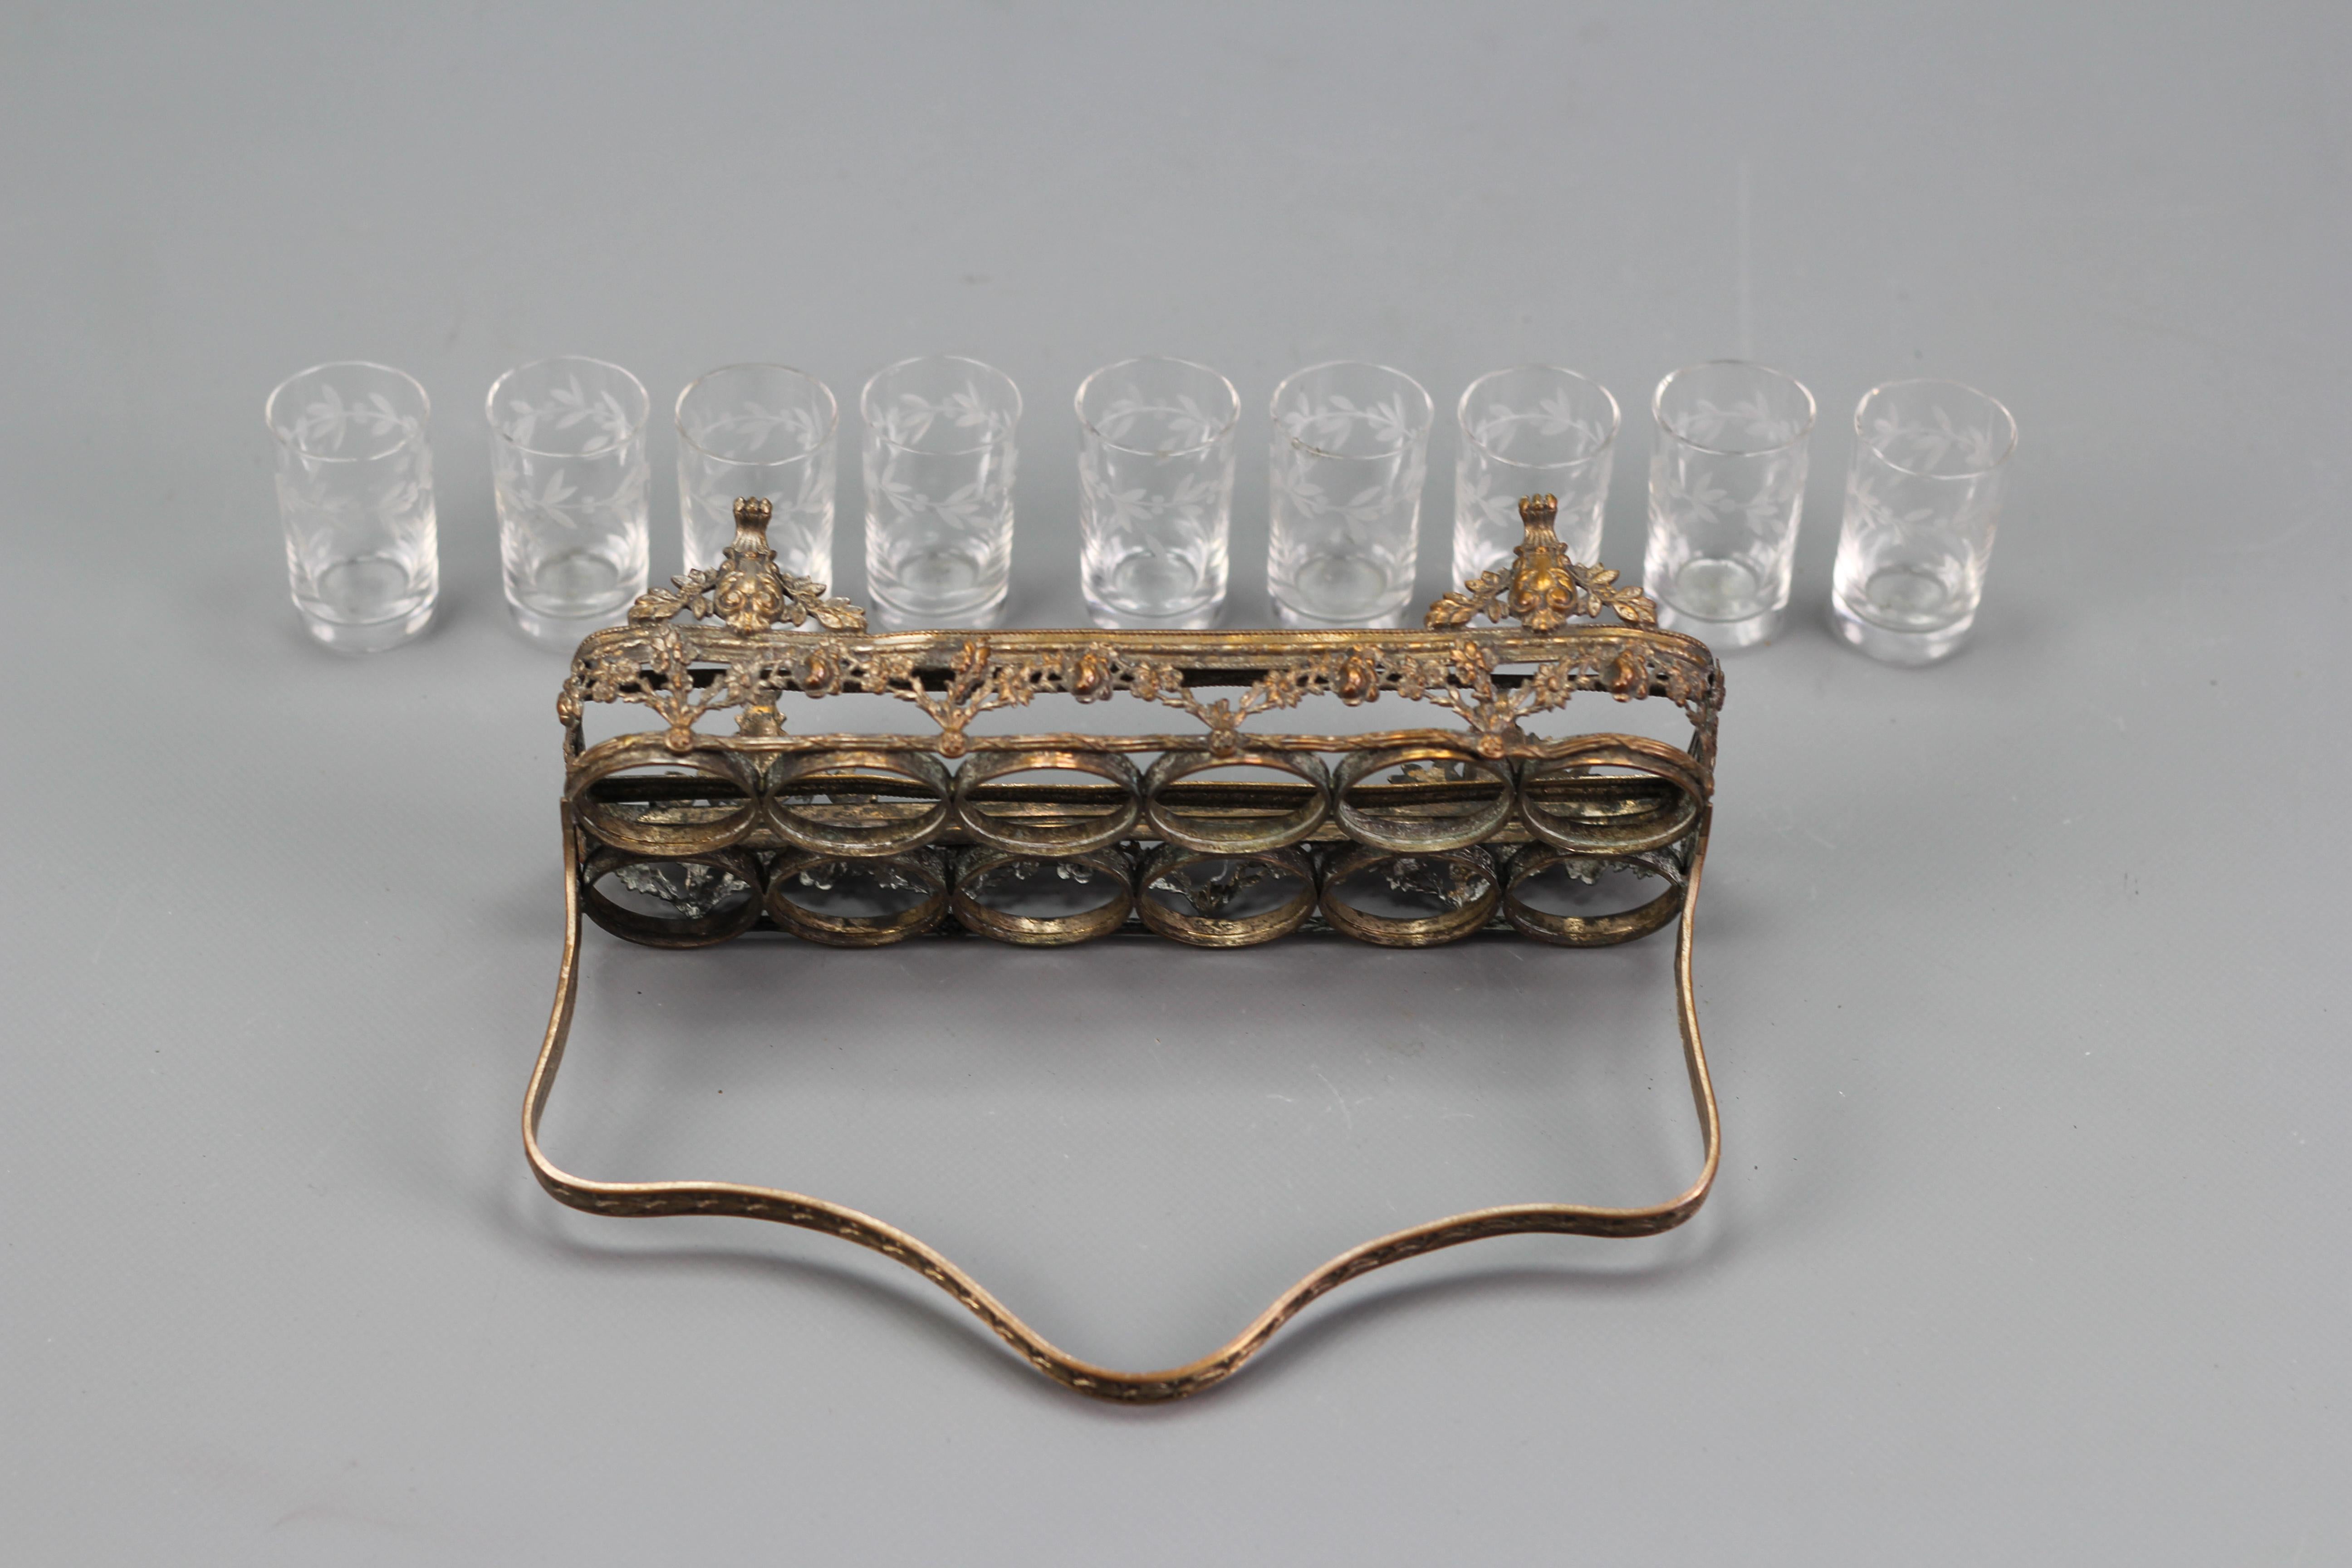 French Art Nouveau Nine Glasses and Brass Basket Serving Set, ca. 1920 For Sale 11